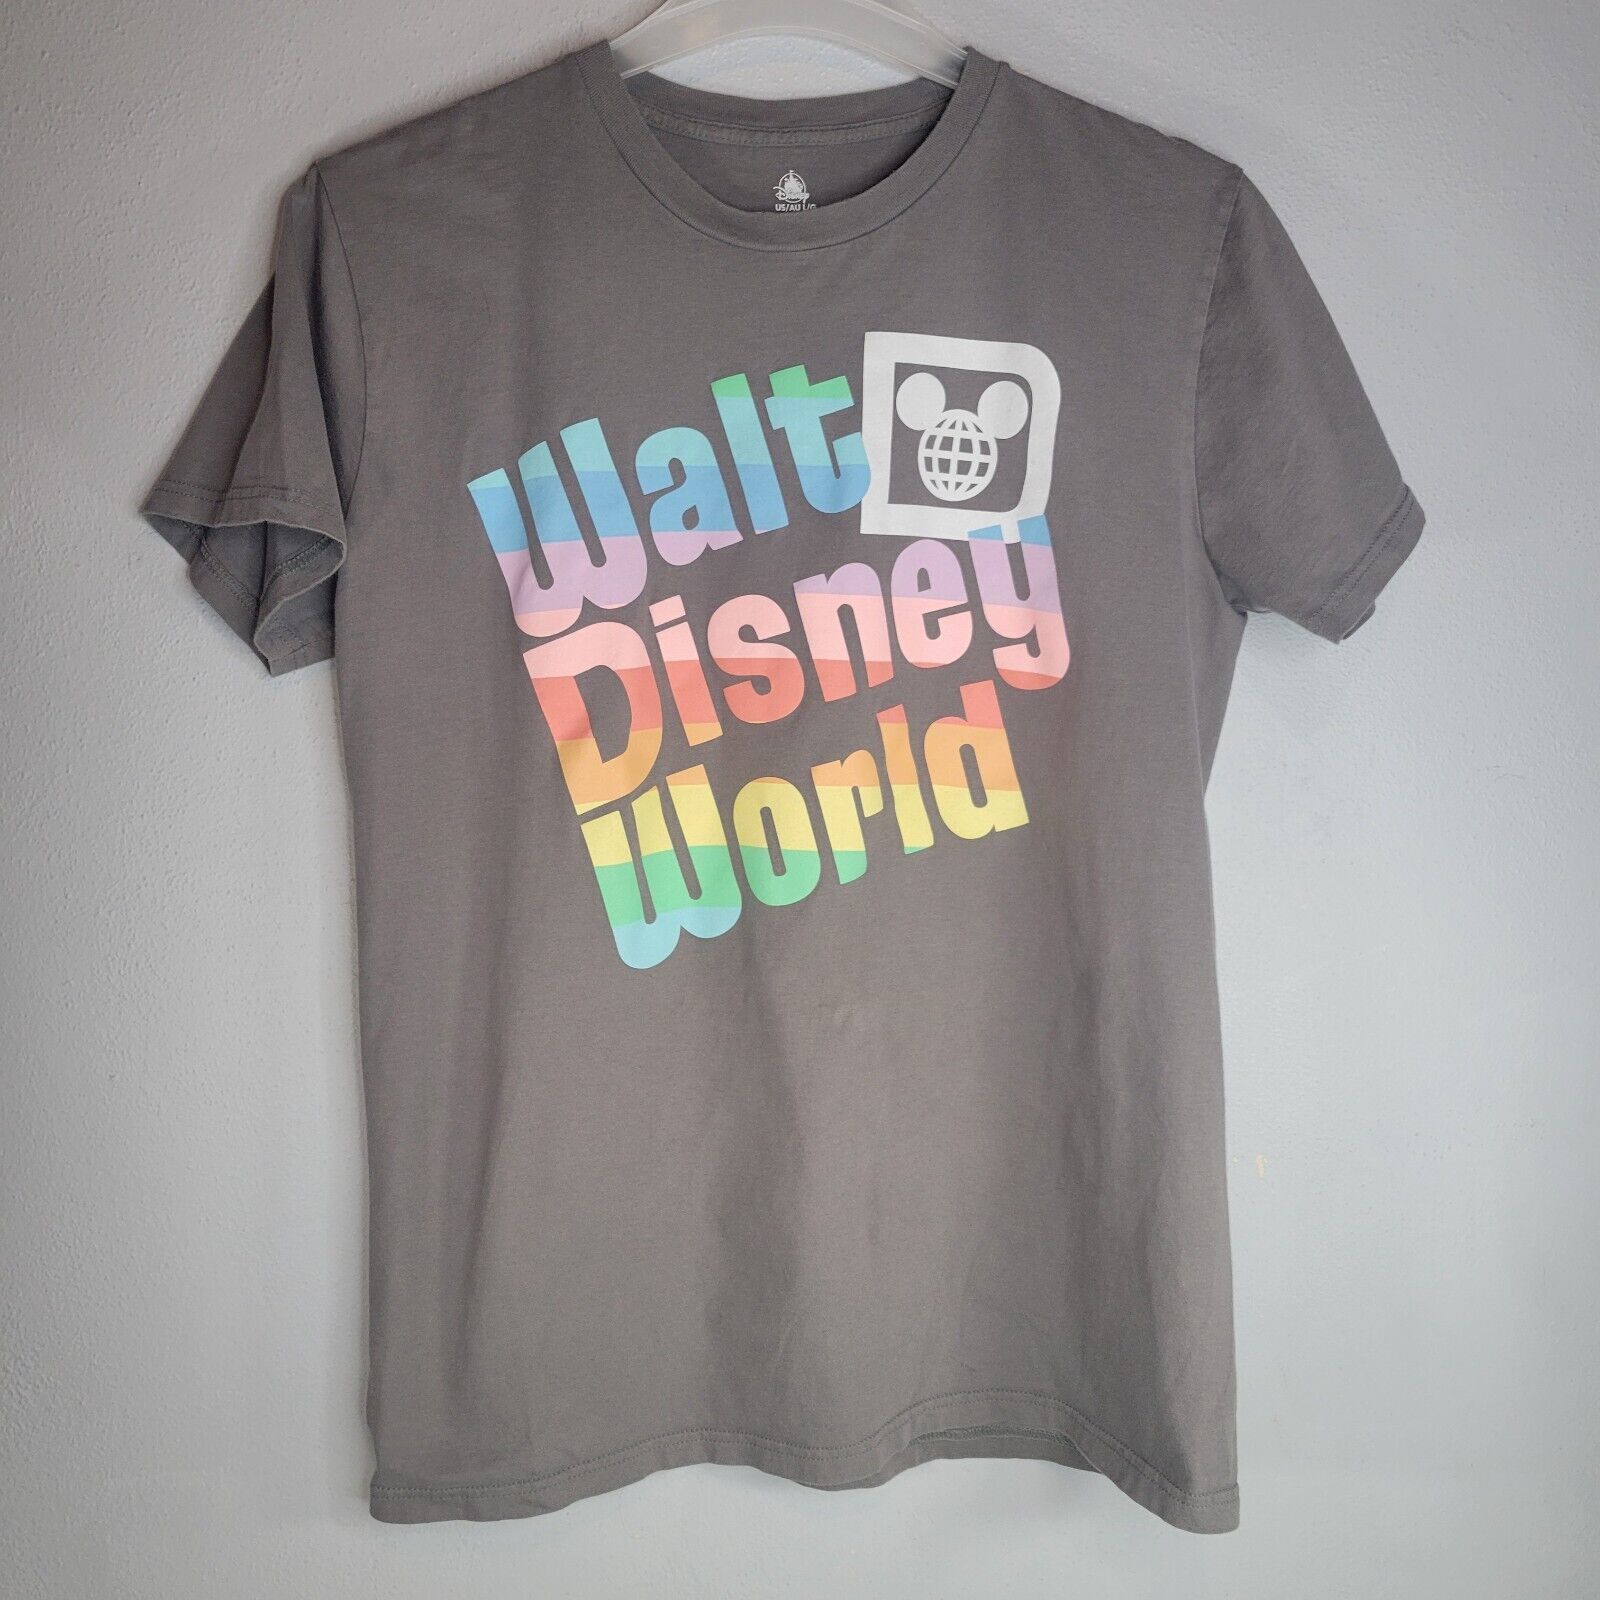 Walt Disney Shirt Large Mens World Print Gray Short Sleeve Casual Tee - $13.98